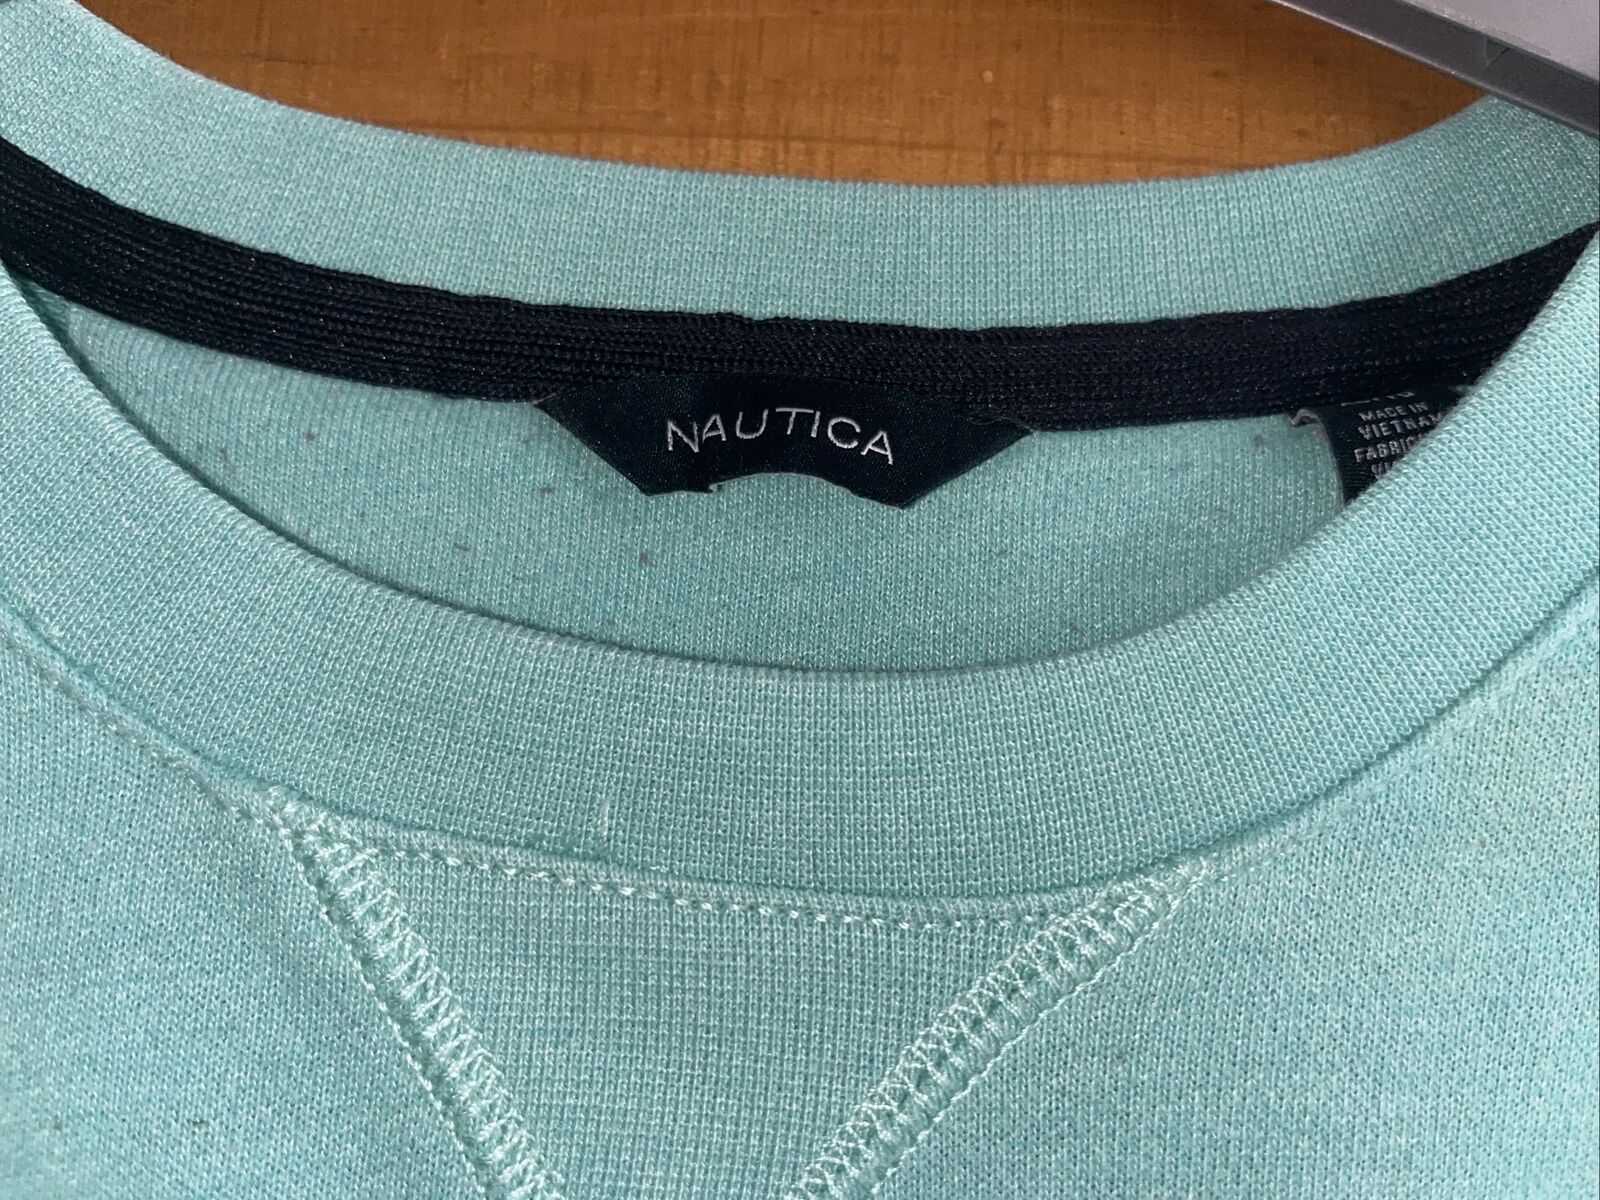 Nautica Sweatshirt Crew Neck Adult XL Cotton Men’s Mint Green Vintage ...